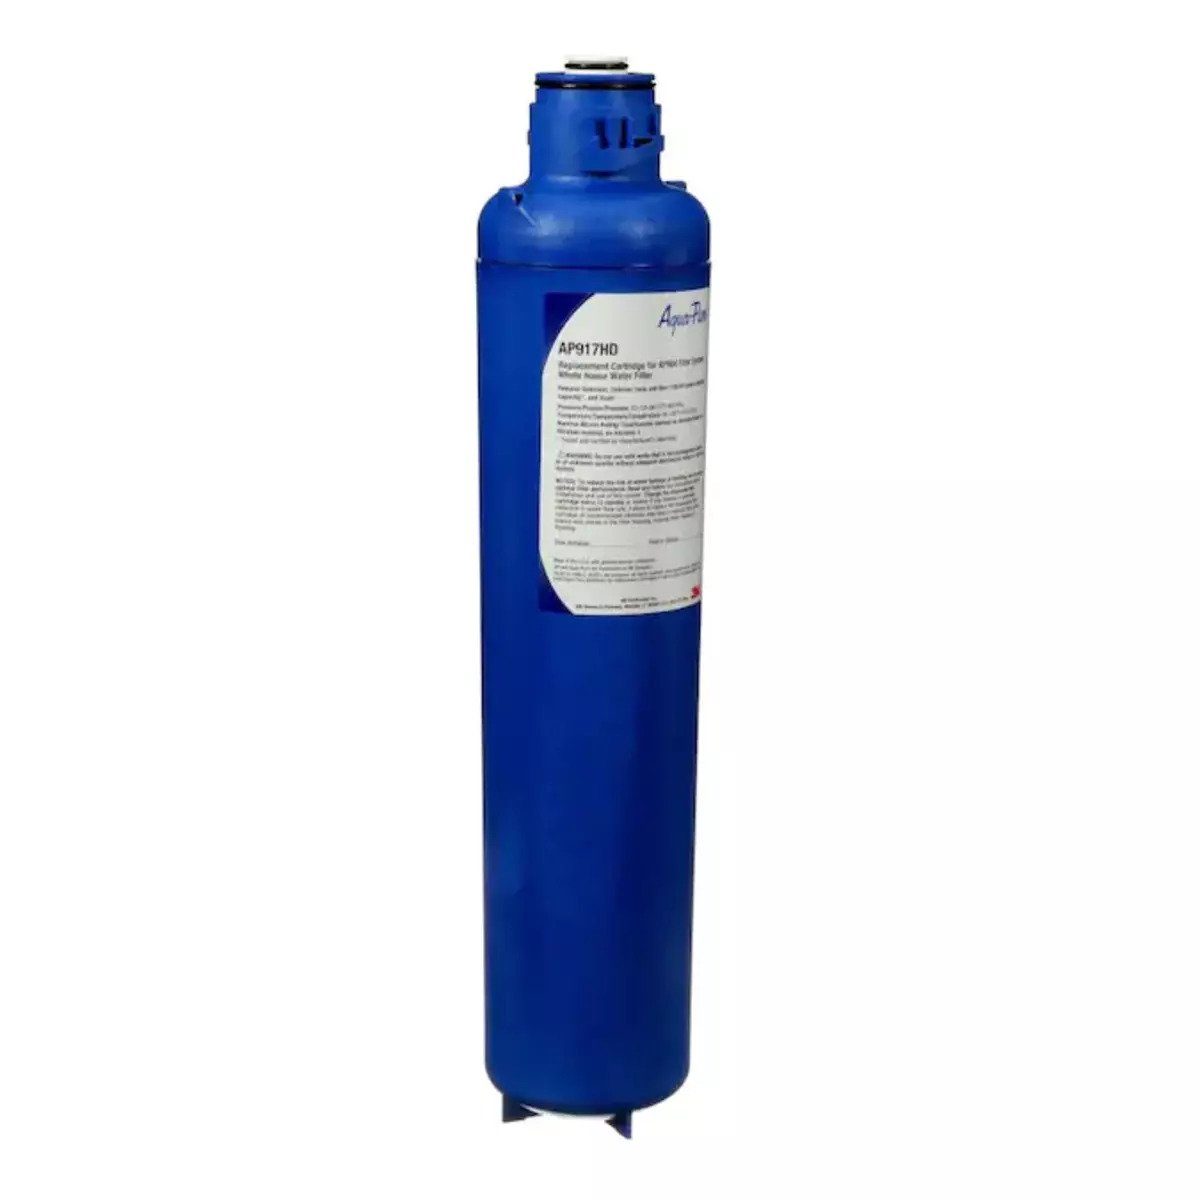 3M Aqua-Pure Water Filters